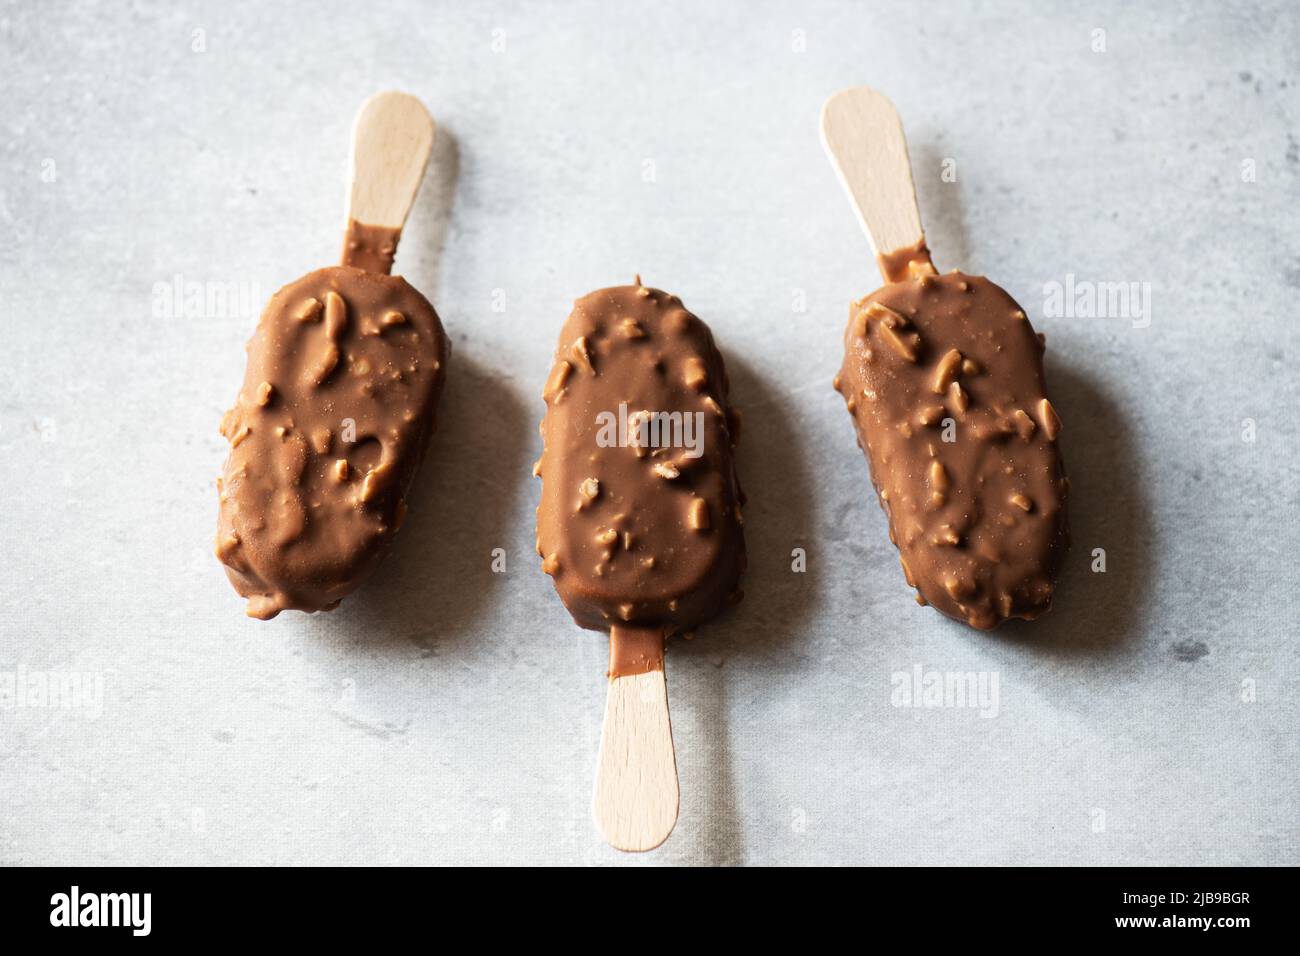 https://c8.alamy.com/comp/2JB9BGR/chocolate-almond-ice-cream-on-a-wooden-stick-on-a-gray-background-top-view-2JB9BGR.jpg